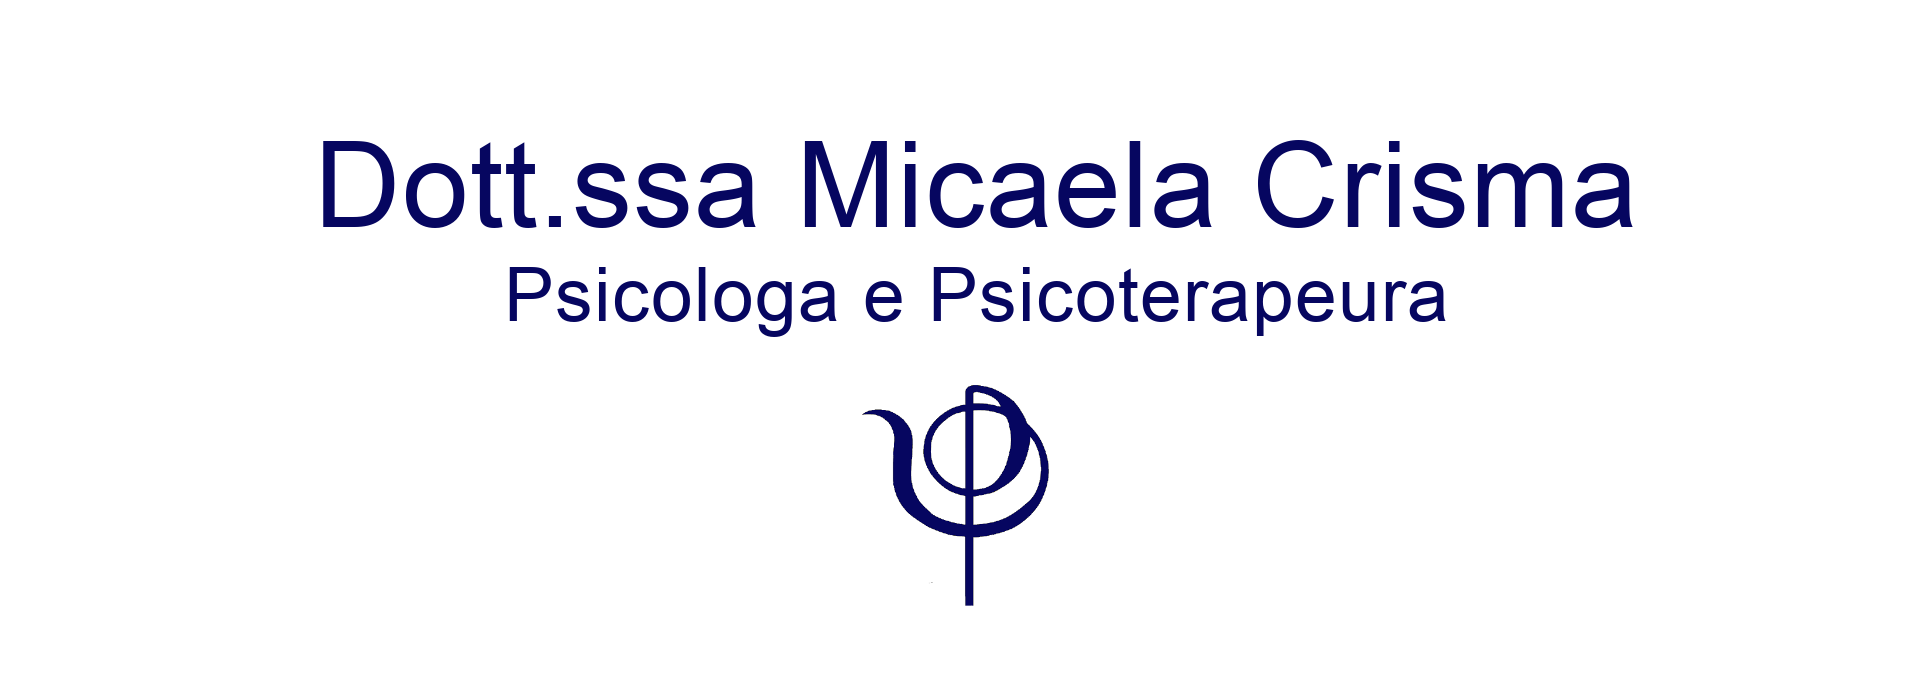 Dott.ssa Micaela Crisma